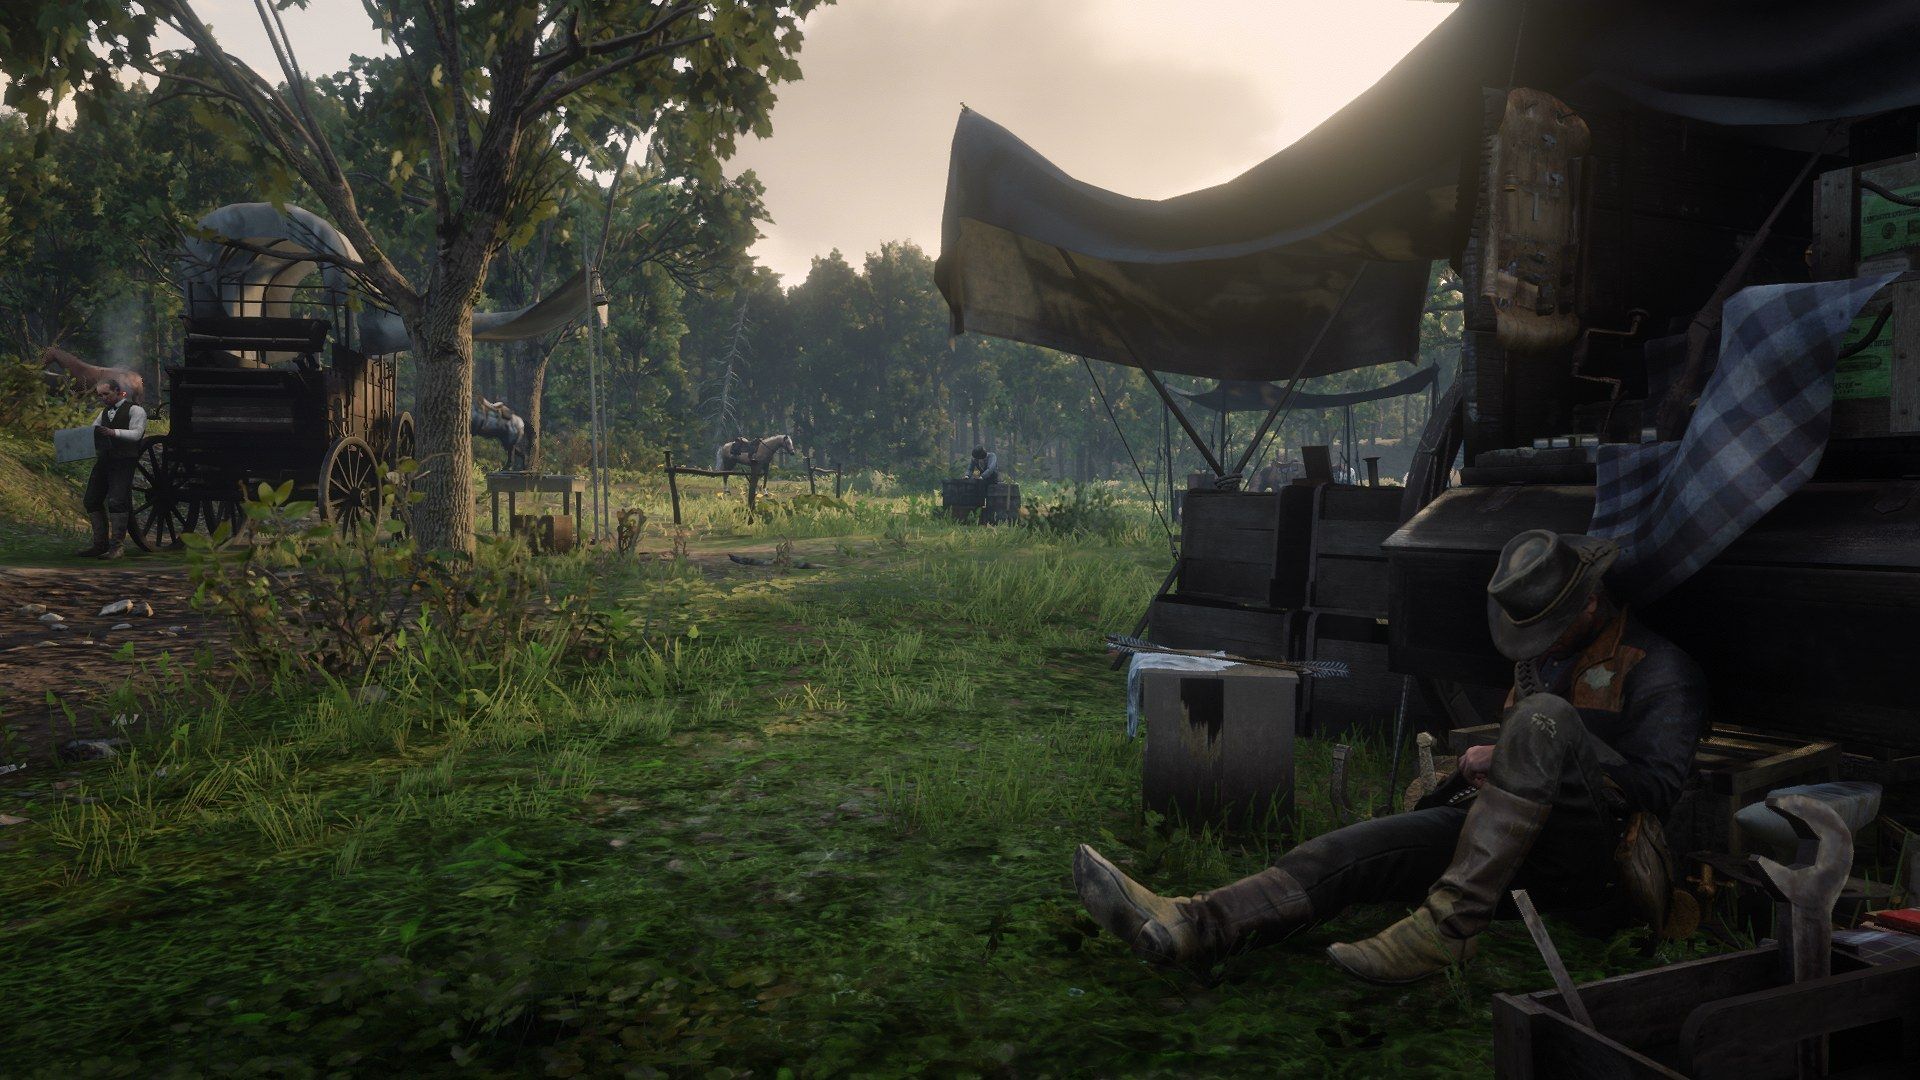 4- Arthur's Tent